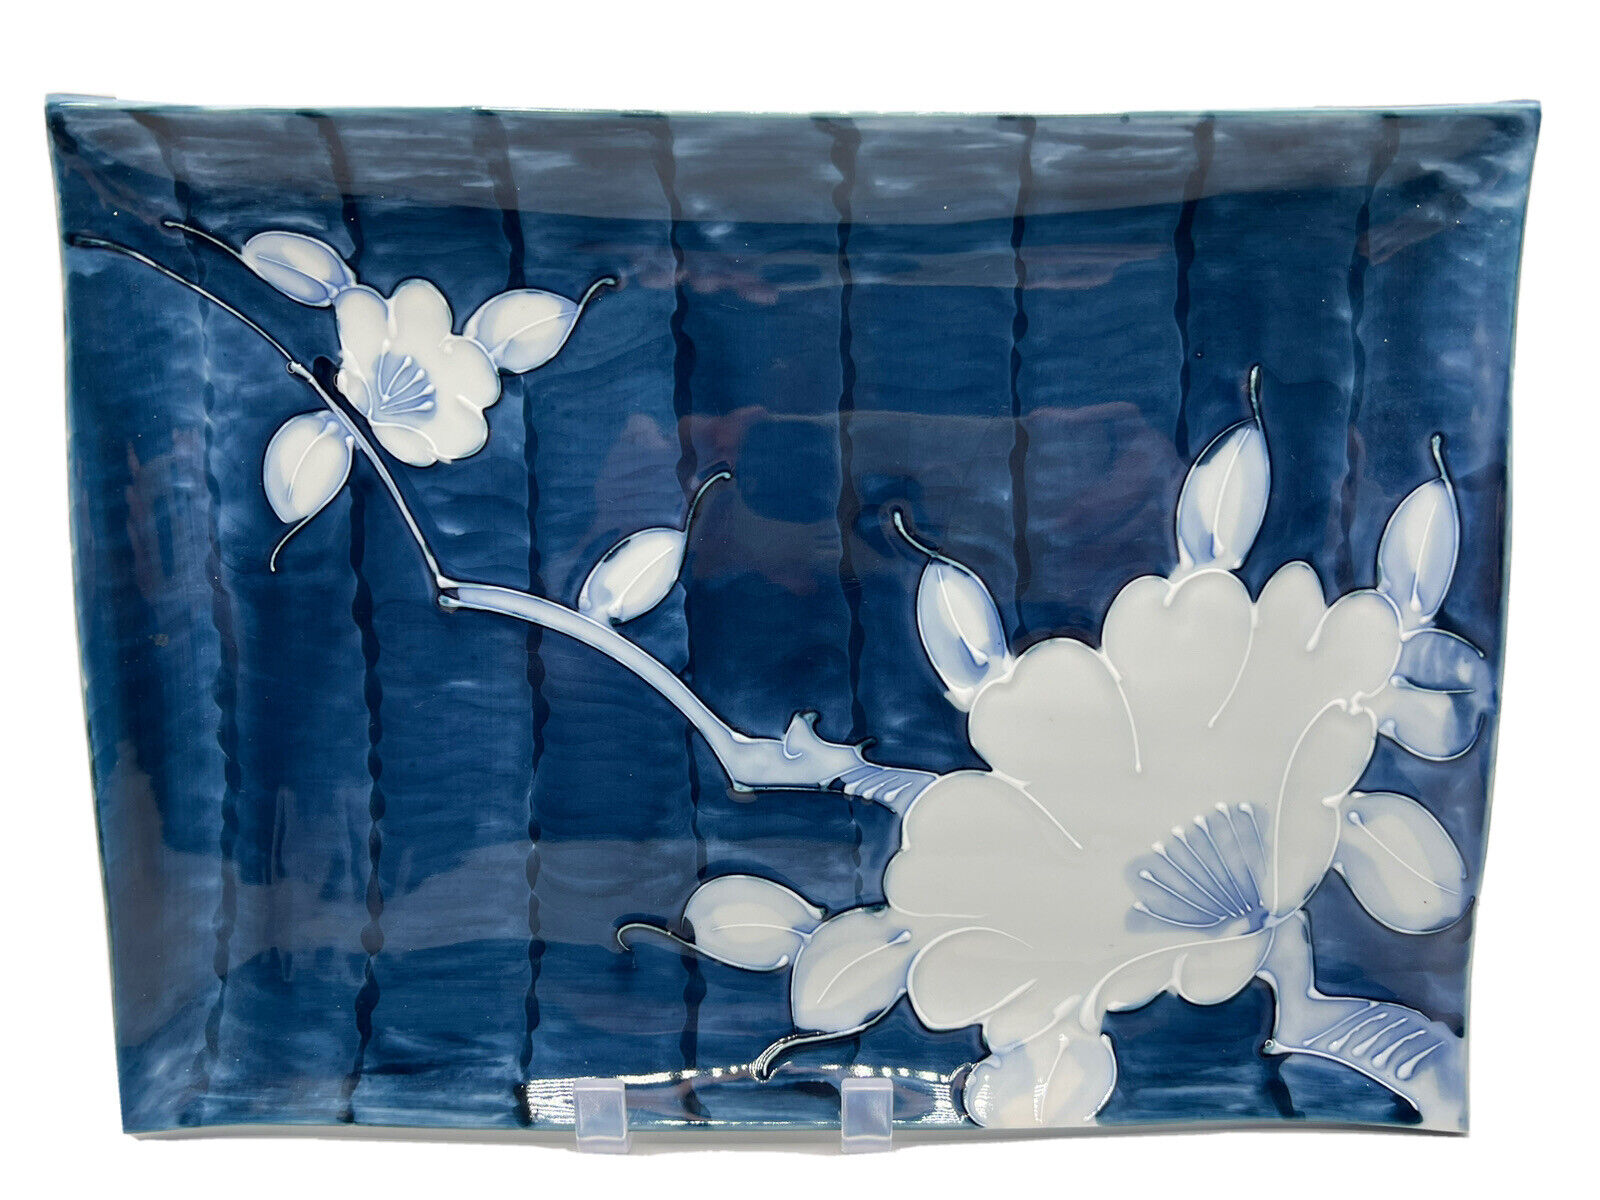 Vintage FF Japan Blue Ceramic Tray Platter Dish 13x9 White Flower No Chips